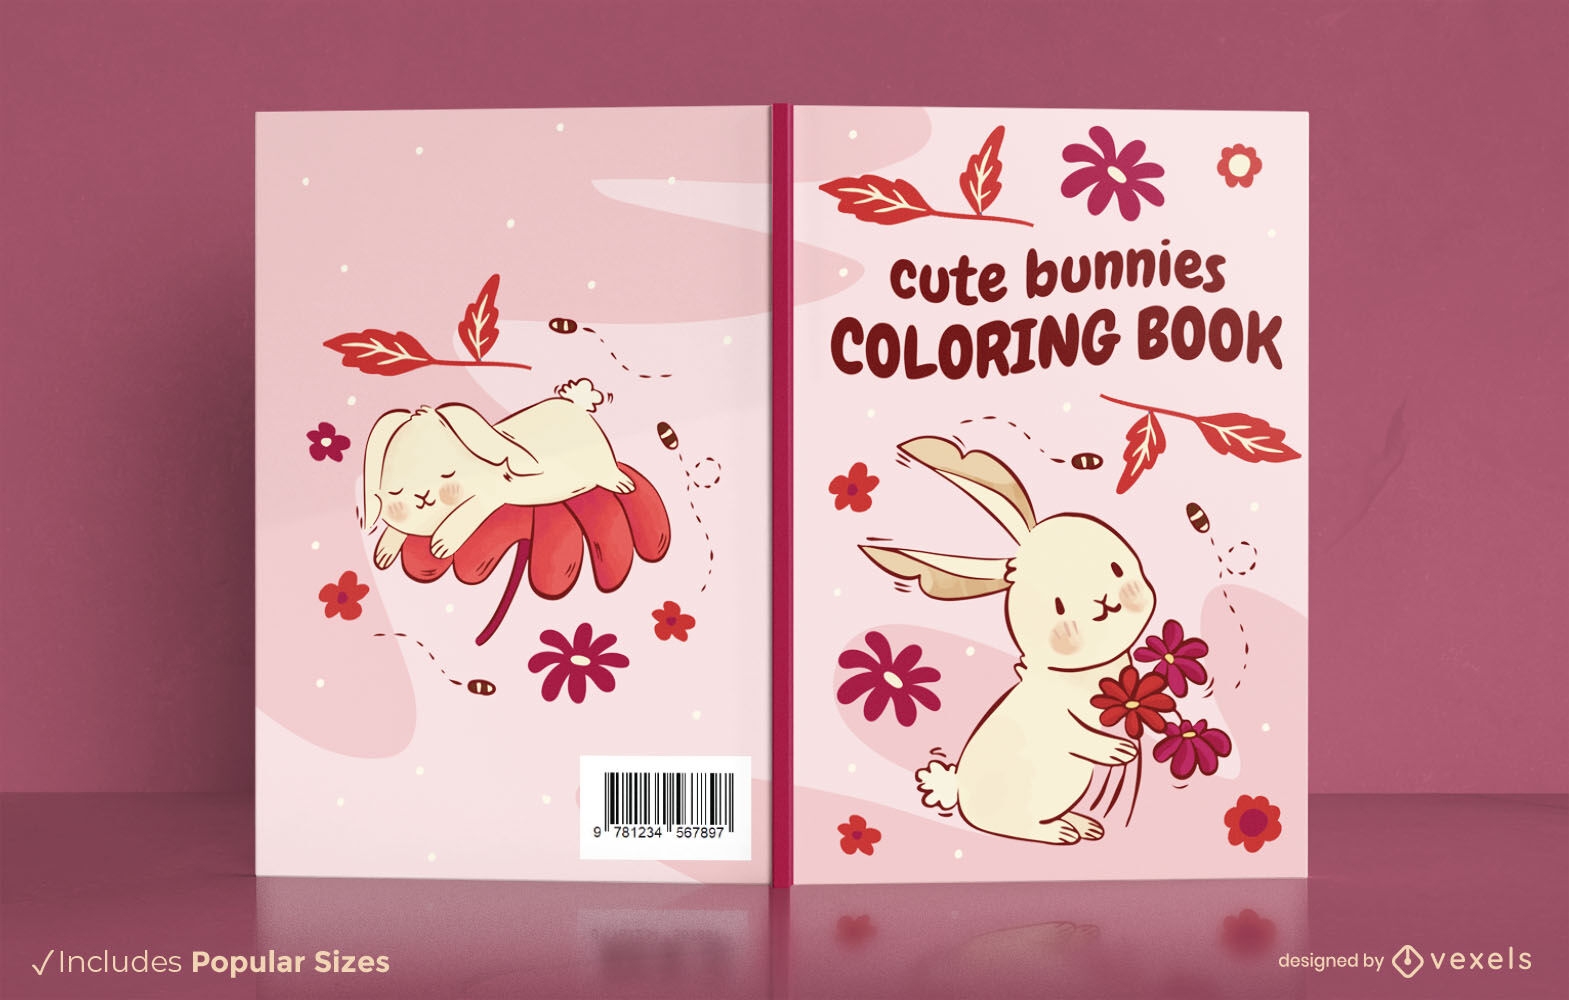 Rabbit holding flowers book cover design